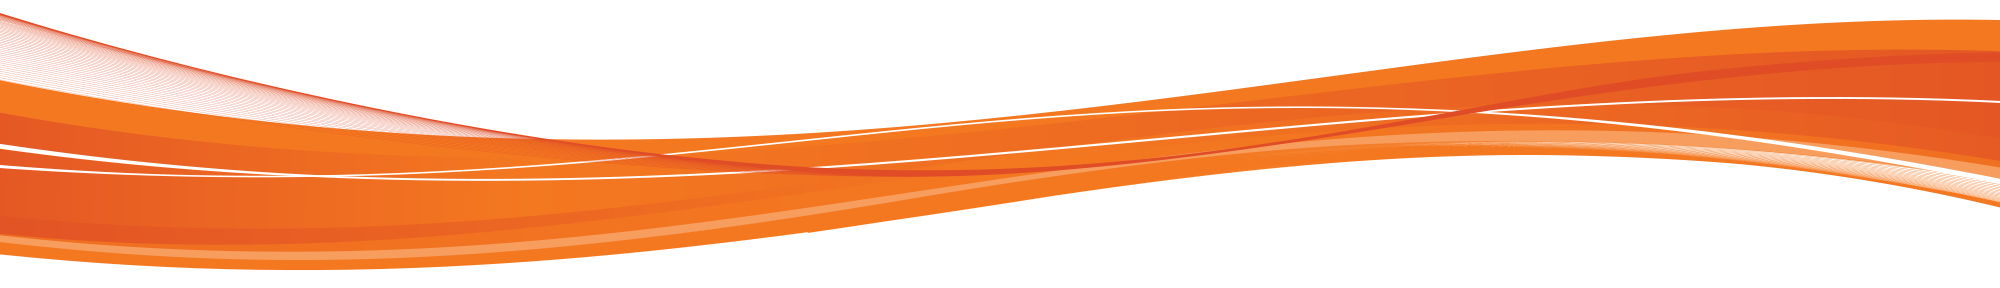 orange-wave-insametal